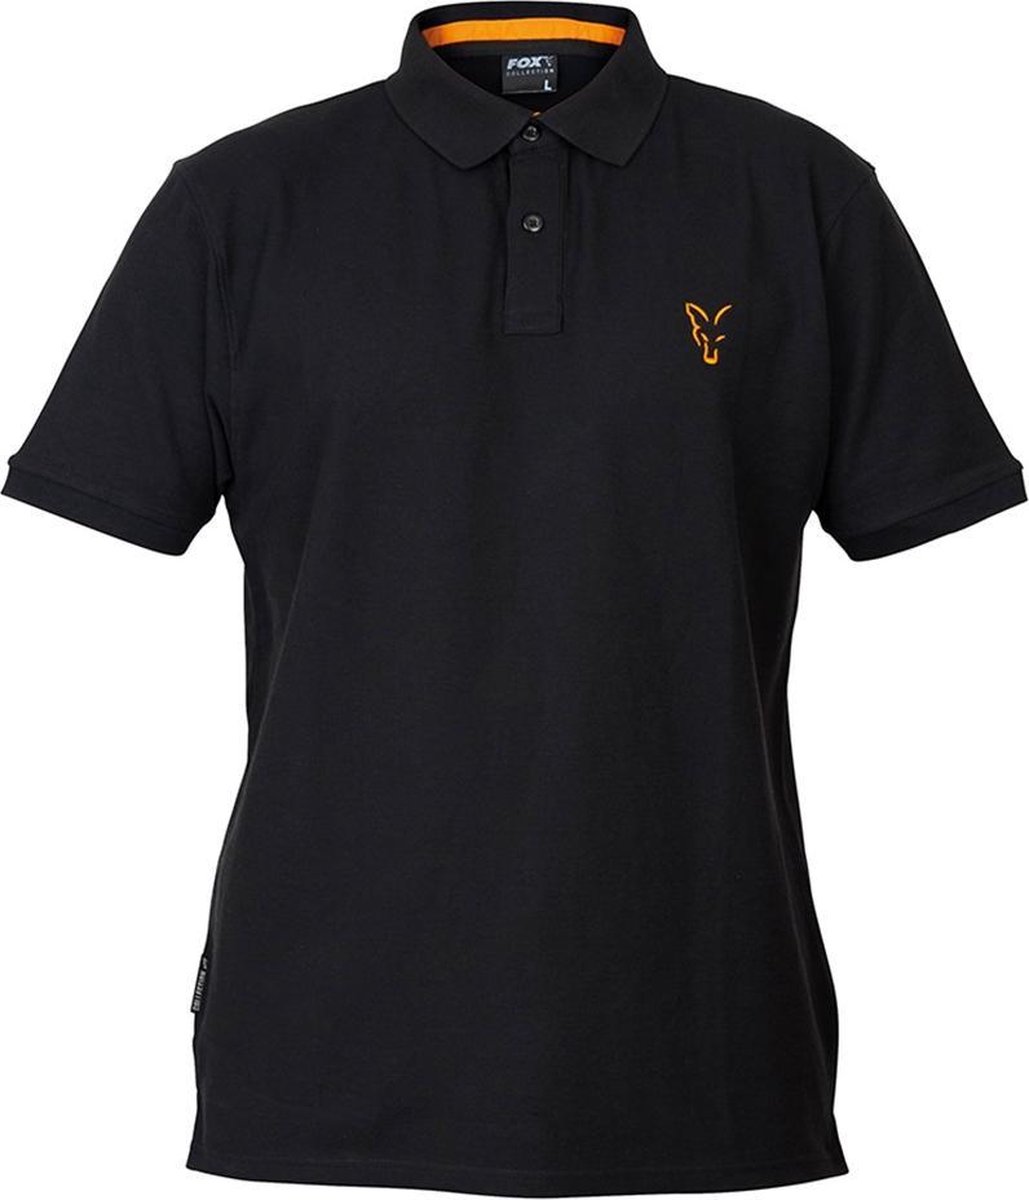 Fox Collection Black/Orange - Polo Shirt - Maat XXXL